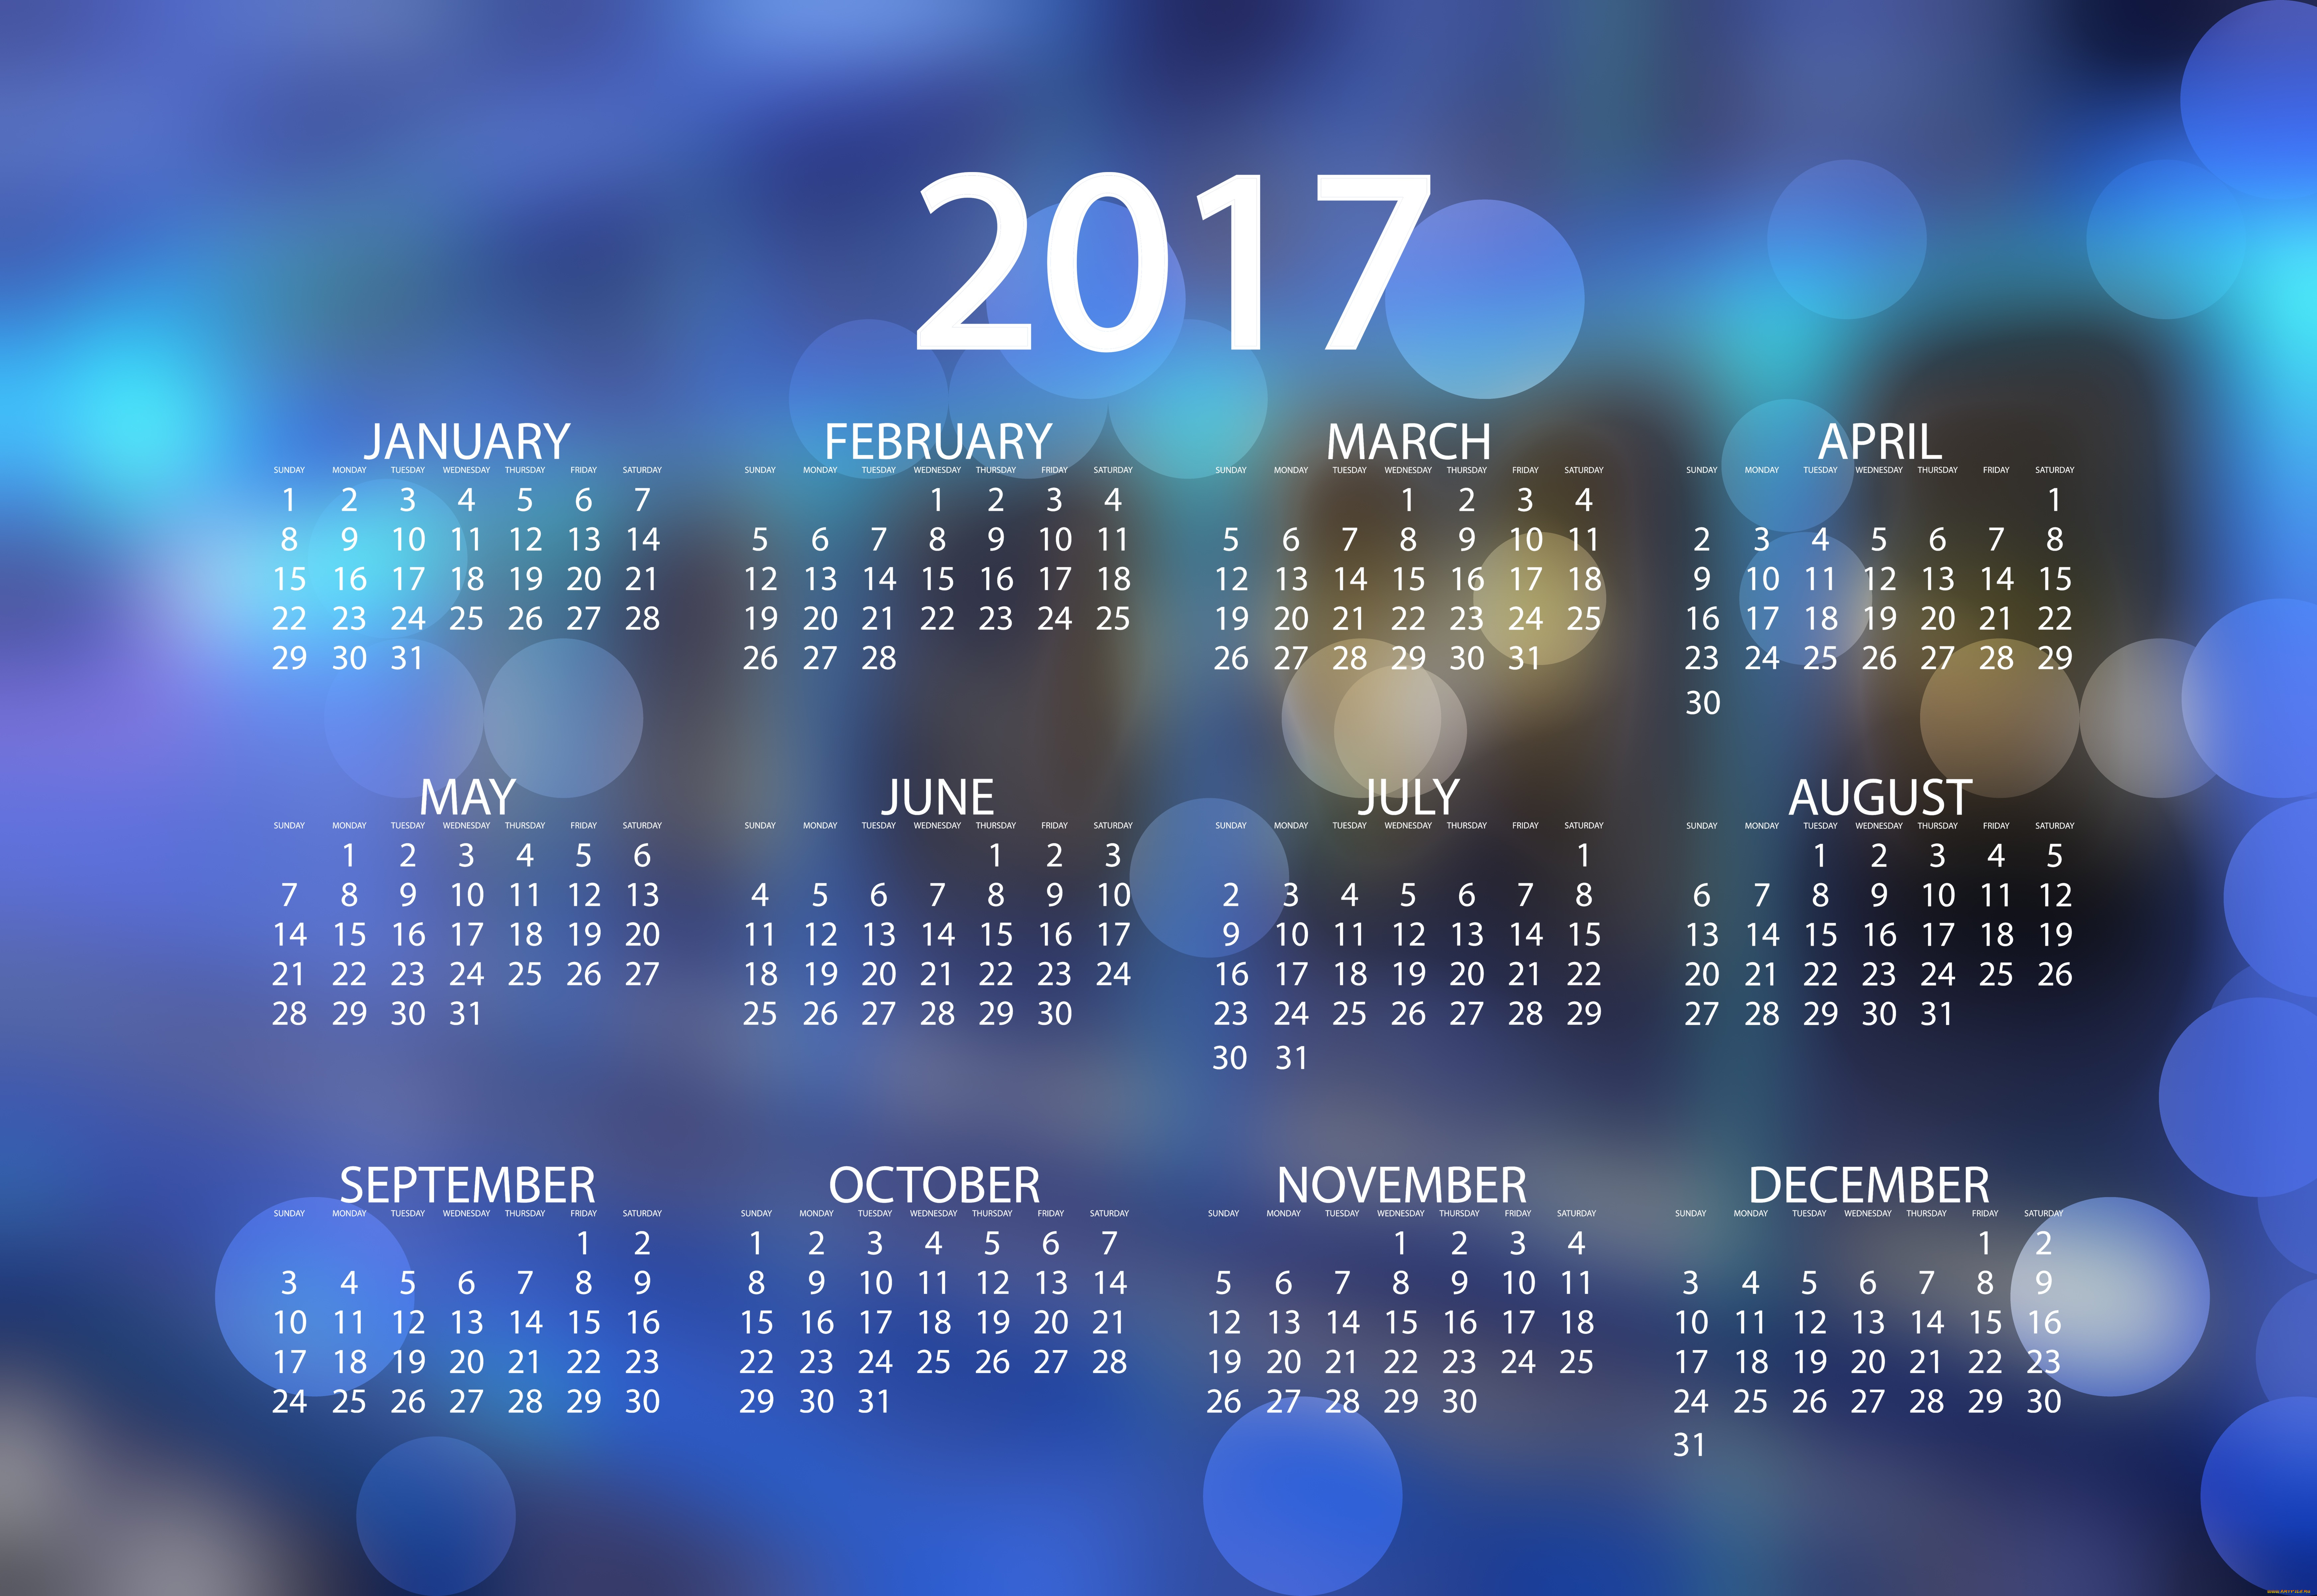 Уникальный 2017 год. Календарь на английском. Календарь 2017. Календарь 2017 года фото. Картинки календарь 2017 года.